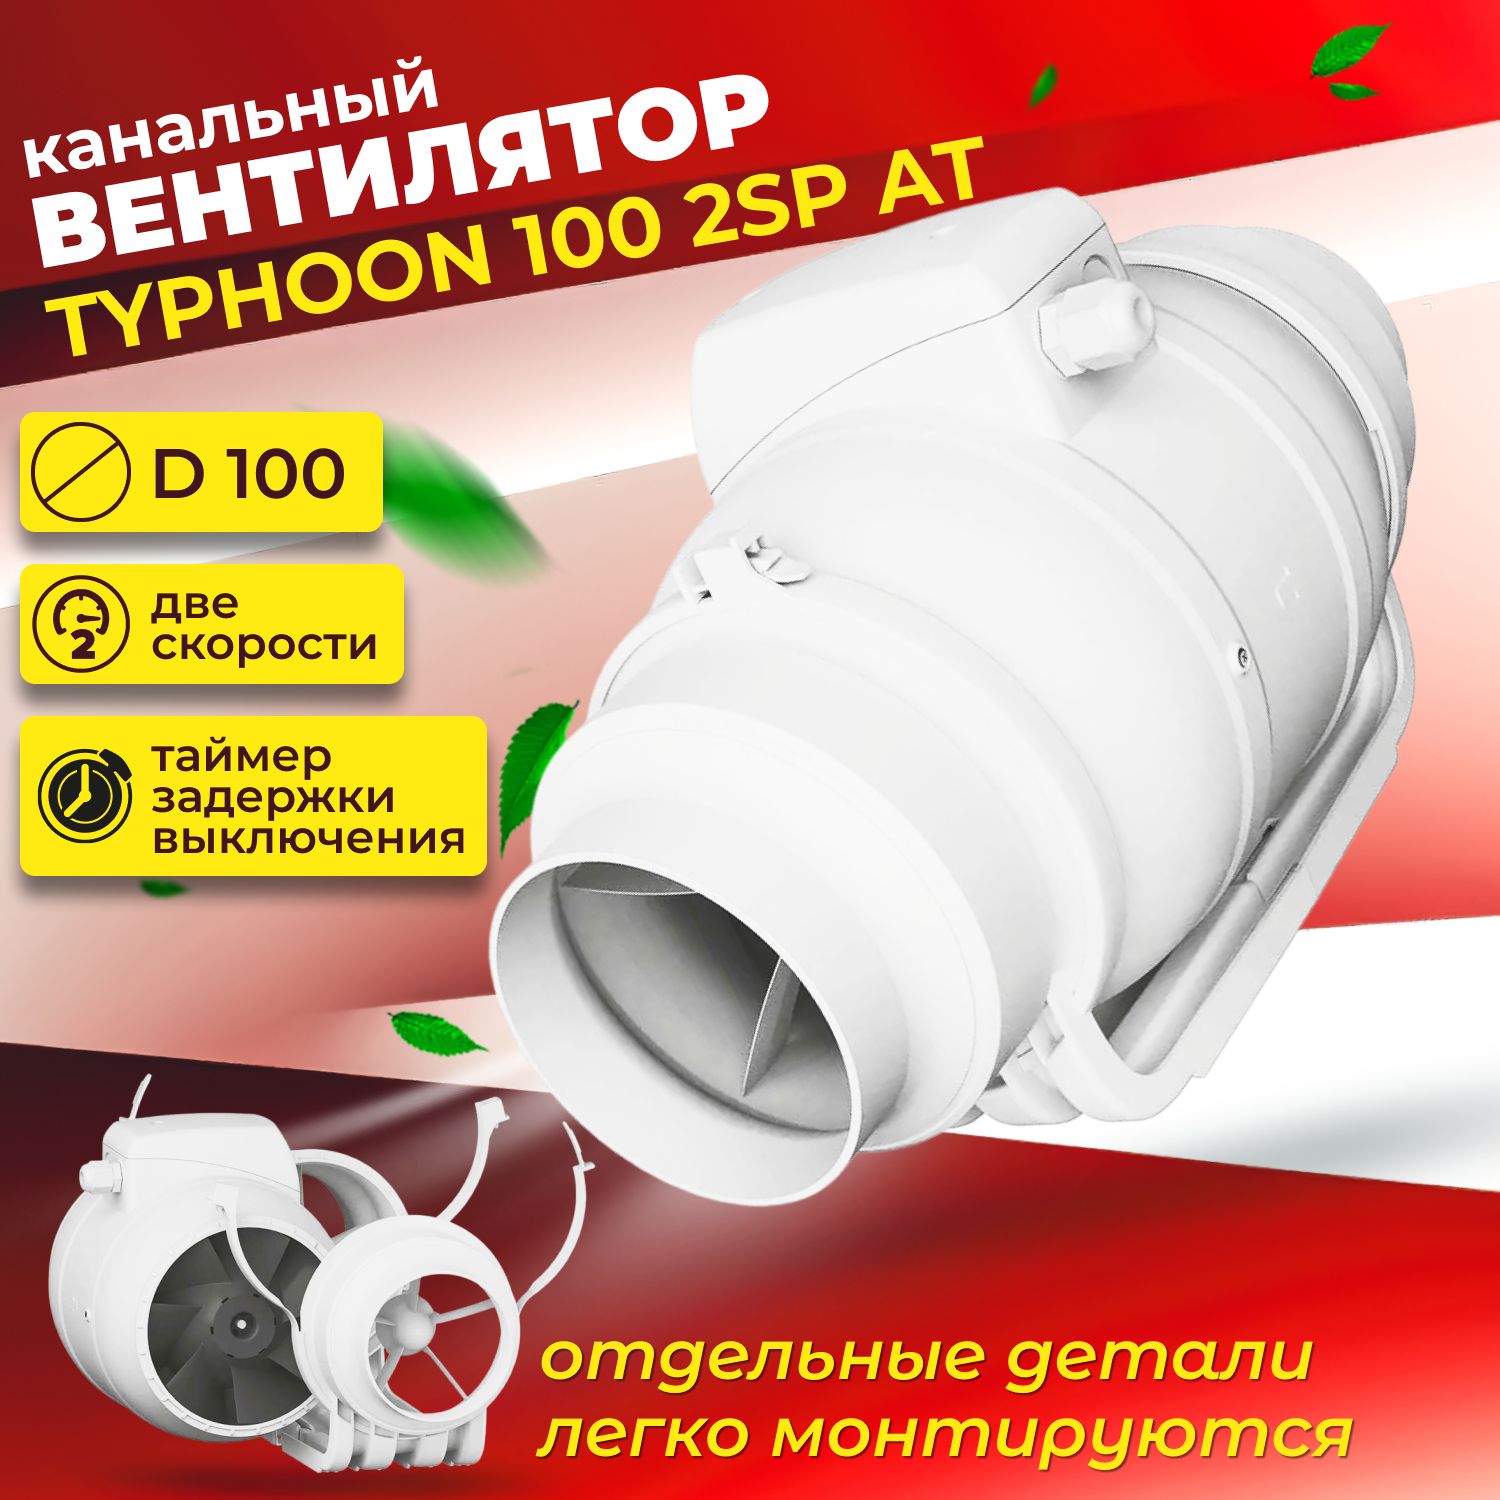 Typhoon 200 2sp. Канальный вентилятор Typhoon 200 мм какой конденсатор.